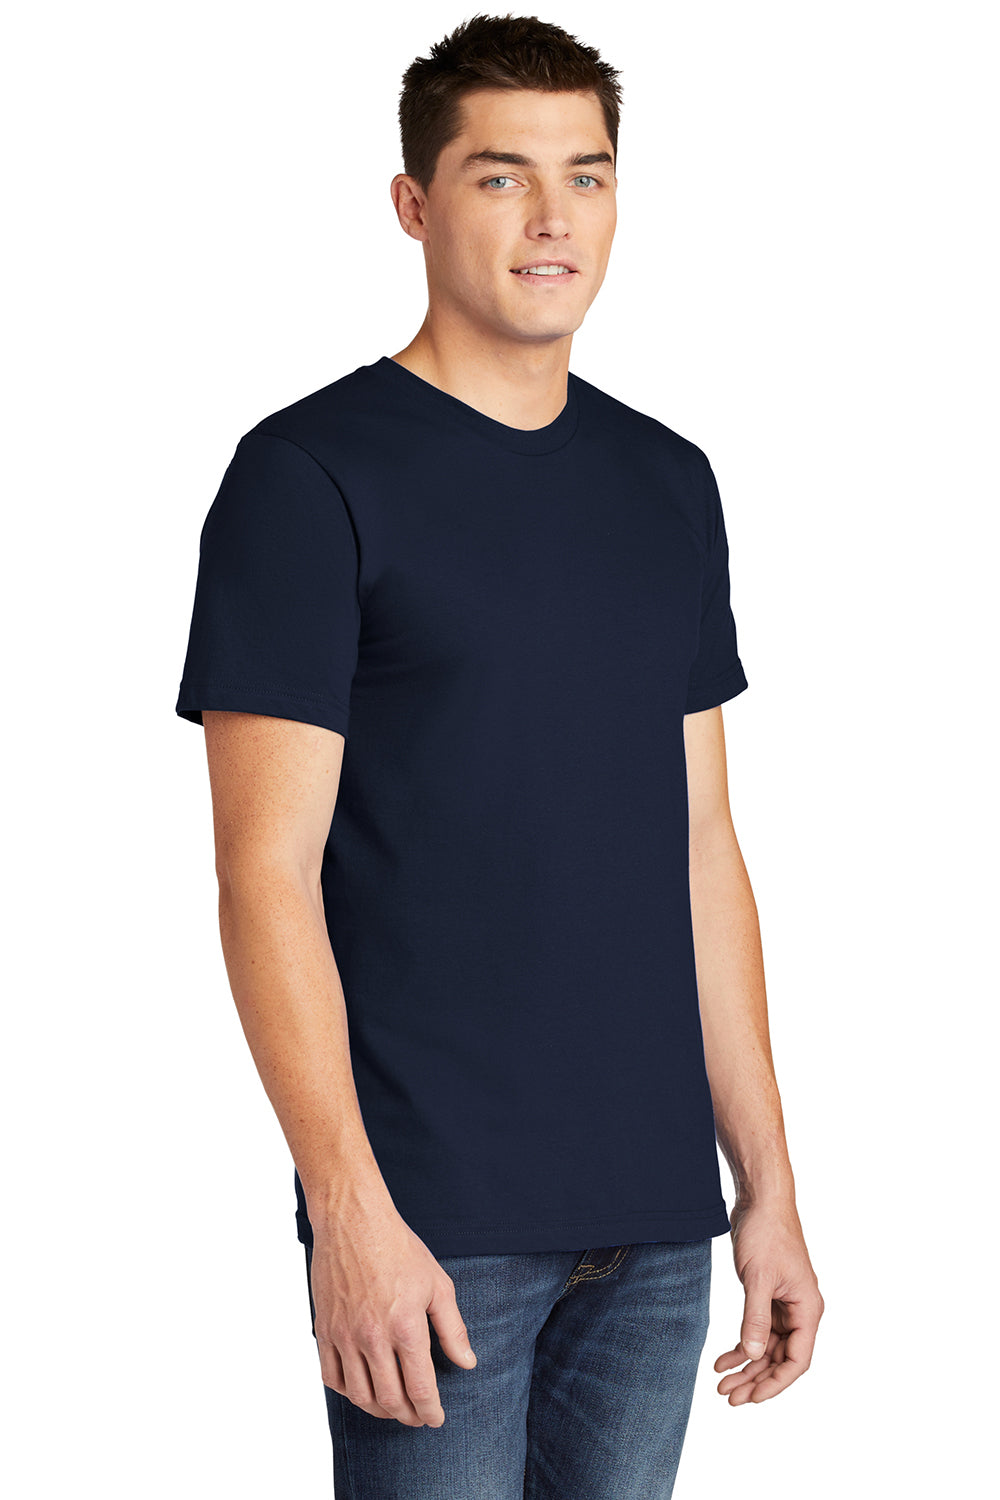 American Apparel 2001 Mens Fine Jersey Short Sleeve Crewneck T-Shirt Navy Blue Model 3Q